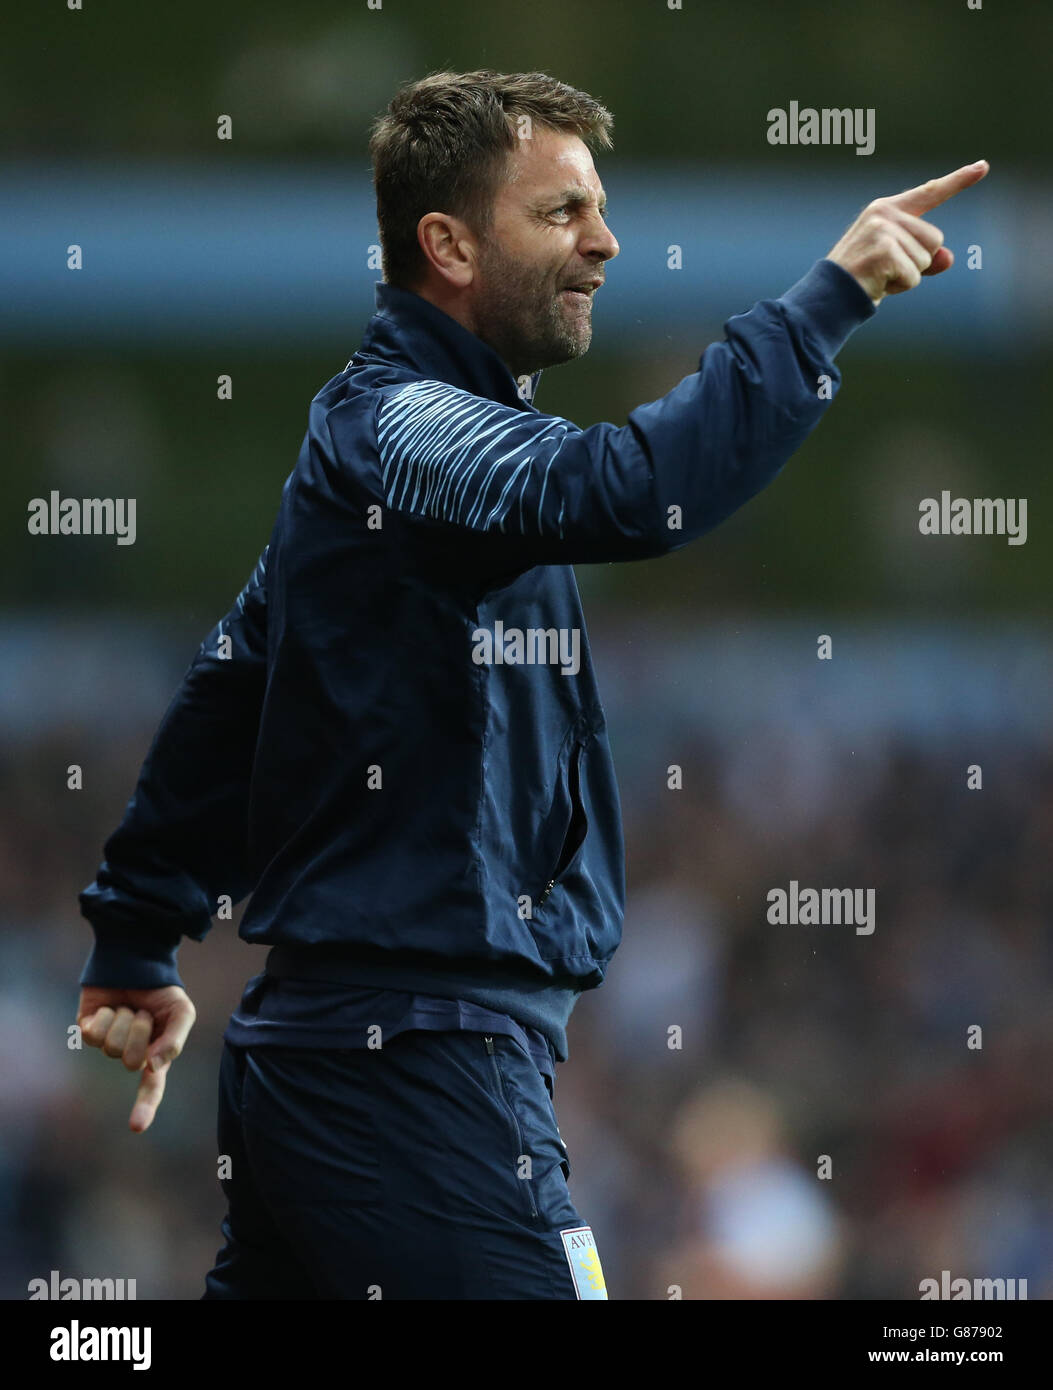 Soccer - Barclays Premier League - Aston Villa v Queens Park Rangers - Villa Park. Aston Villa manager Tim Sherwood gestures on the touchline Stock Photo